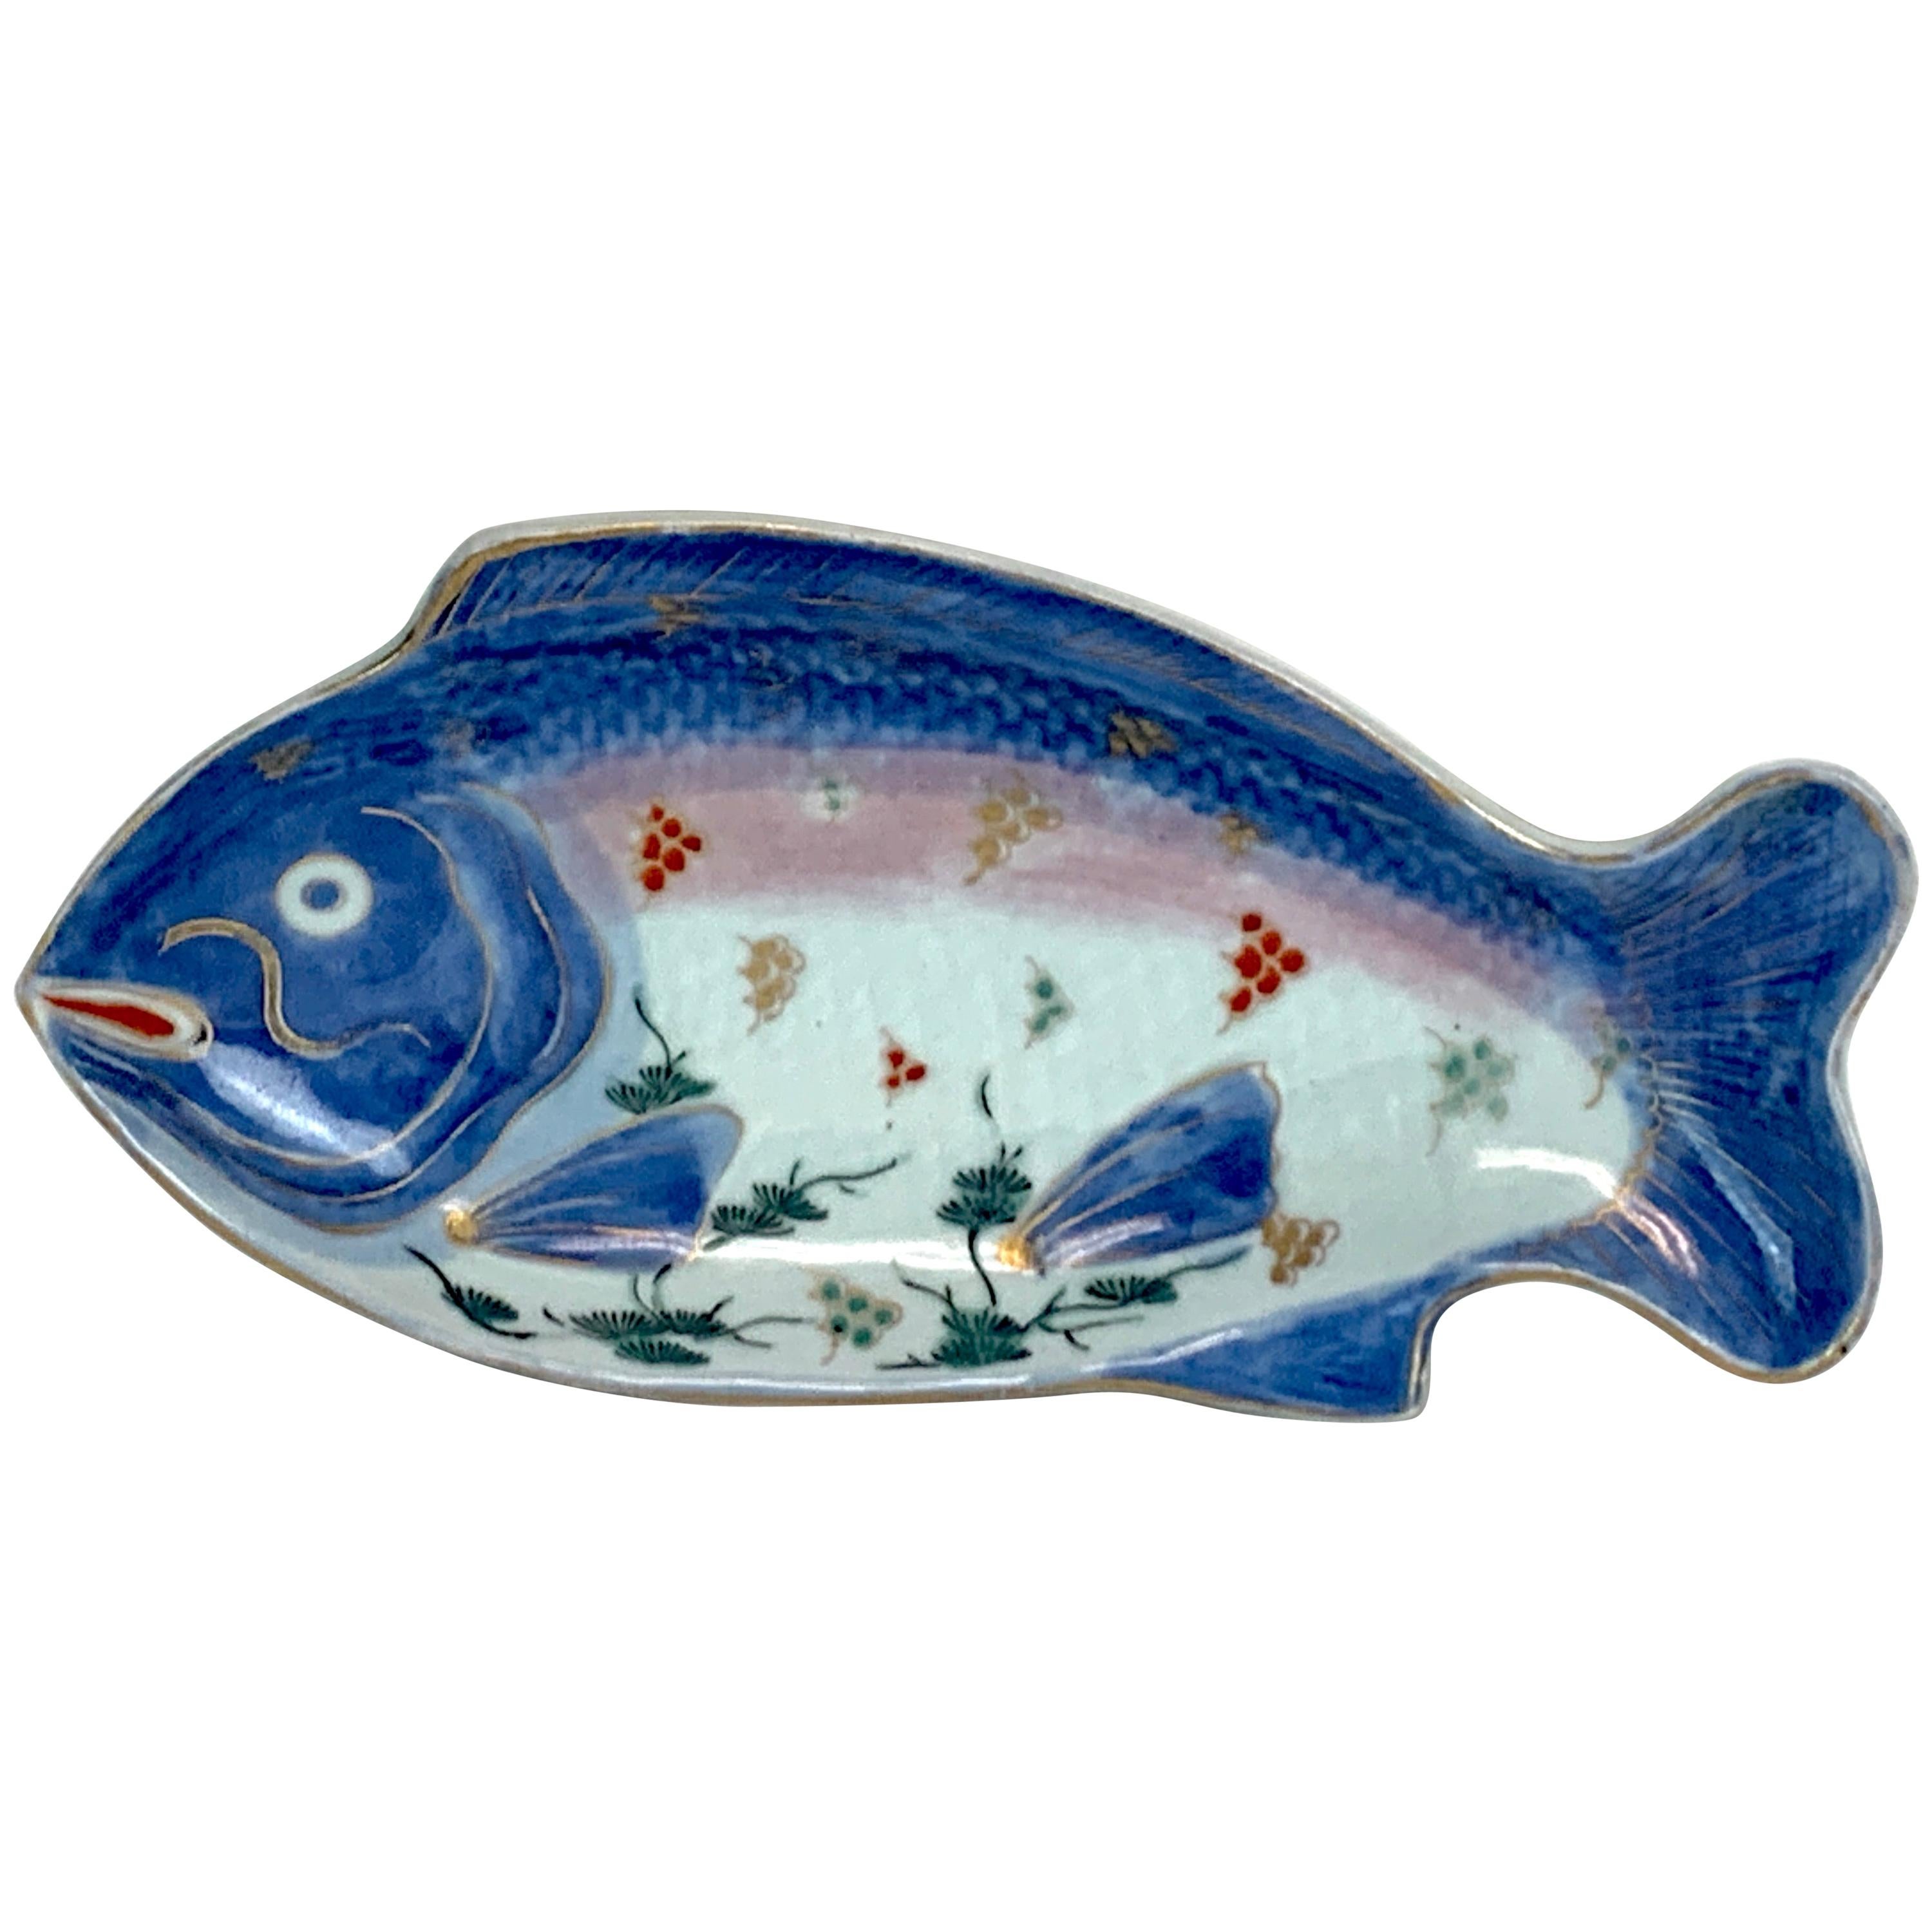 Meiji Imari Fish Plate, by Fukagawa VIII